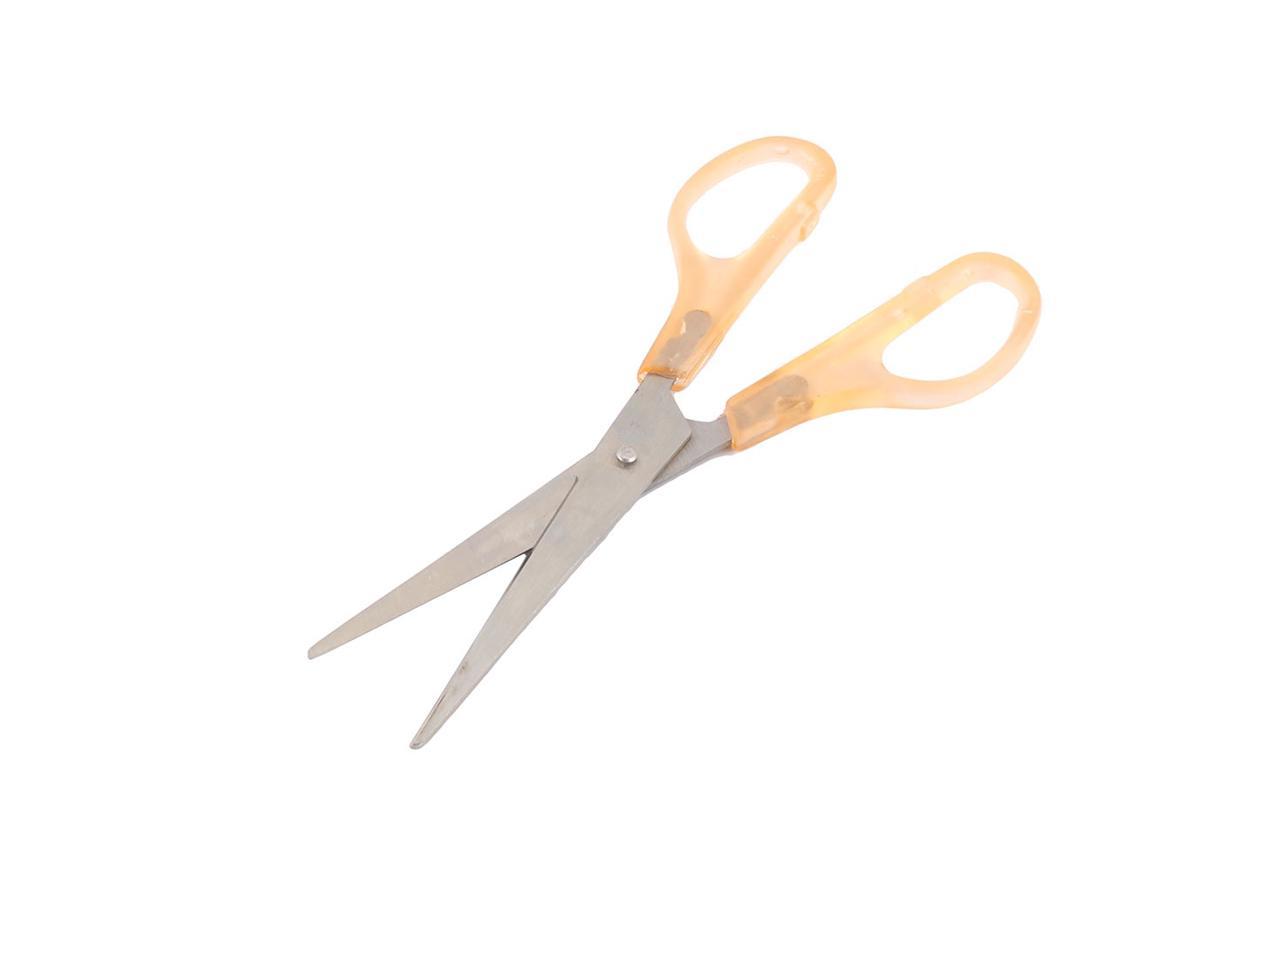 Scissor Clear Handle Gold Metal Design Office Cutting School Household Supplies 